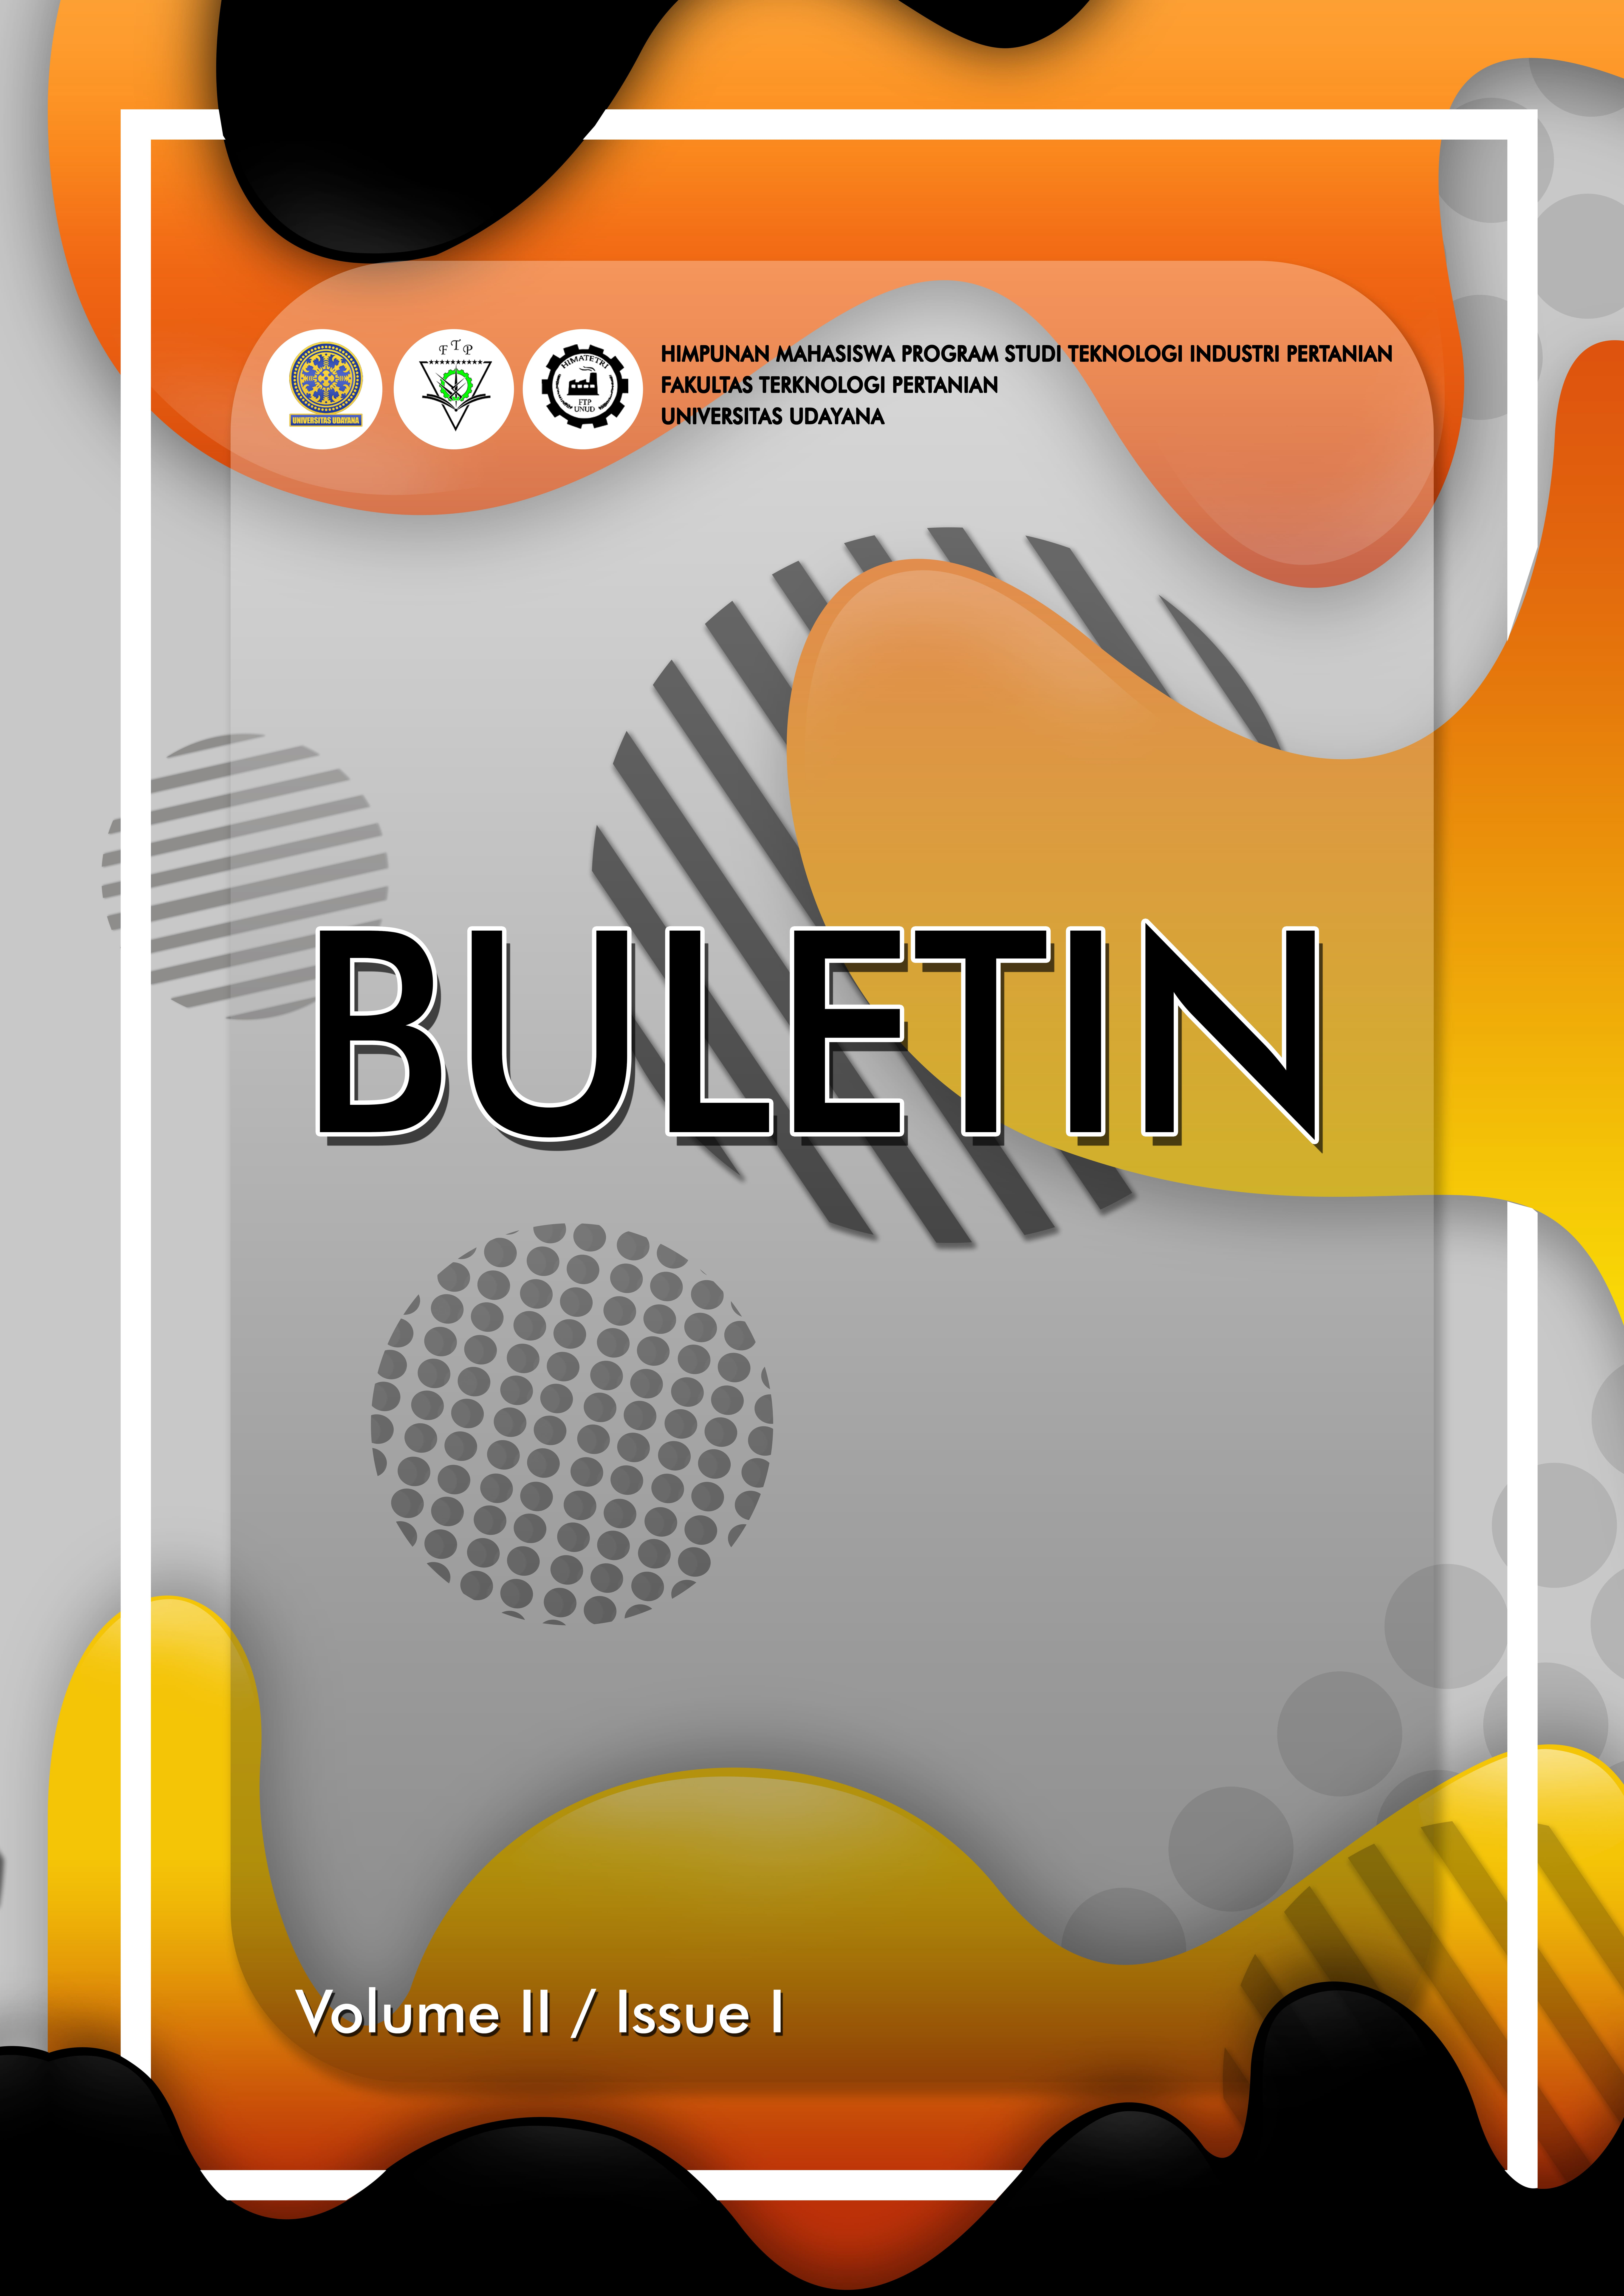 BULETIN HIMATETRI VOLUME II ISSUE I - RETINA 2019